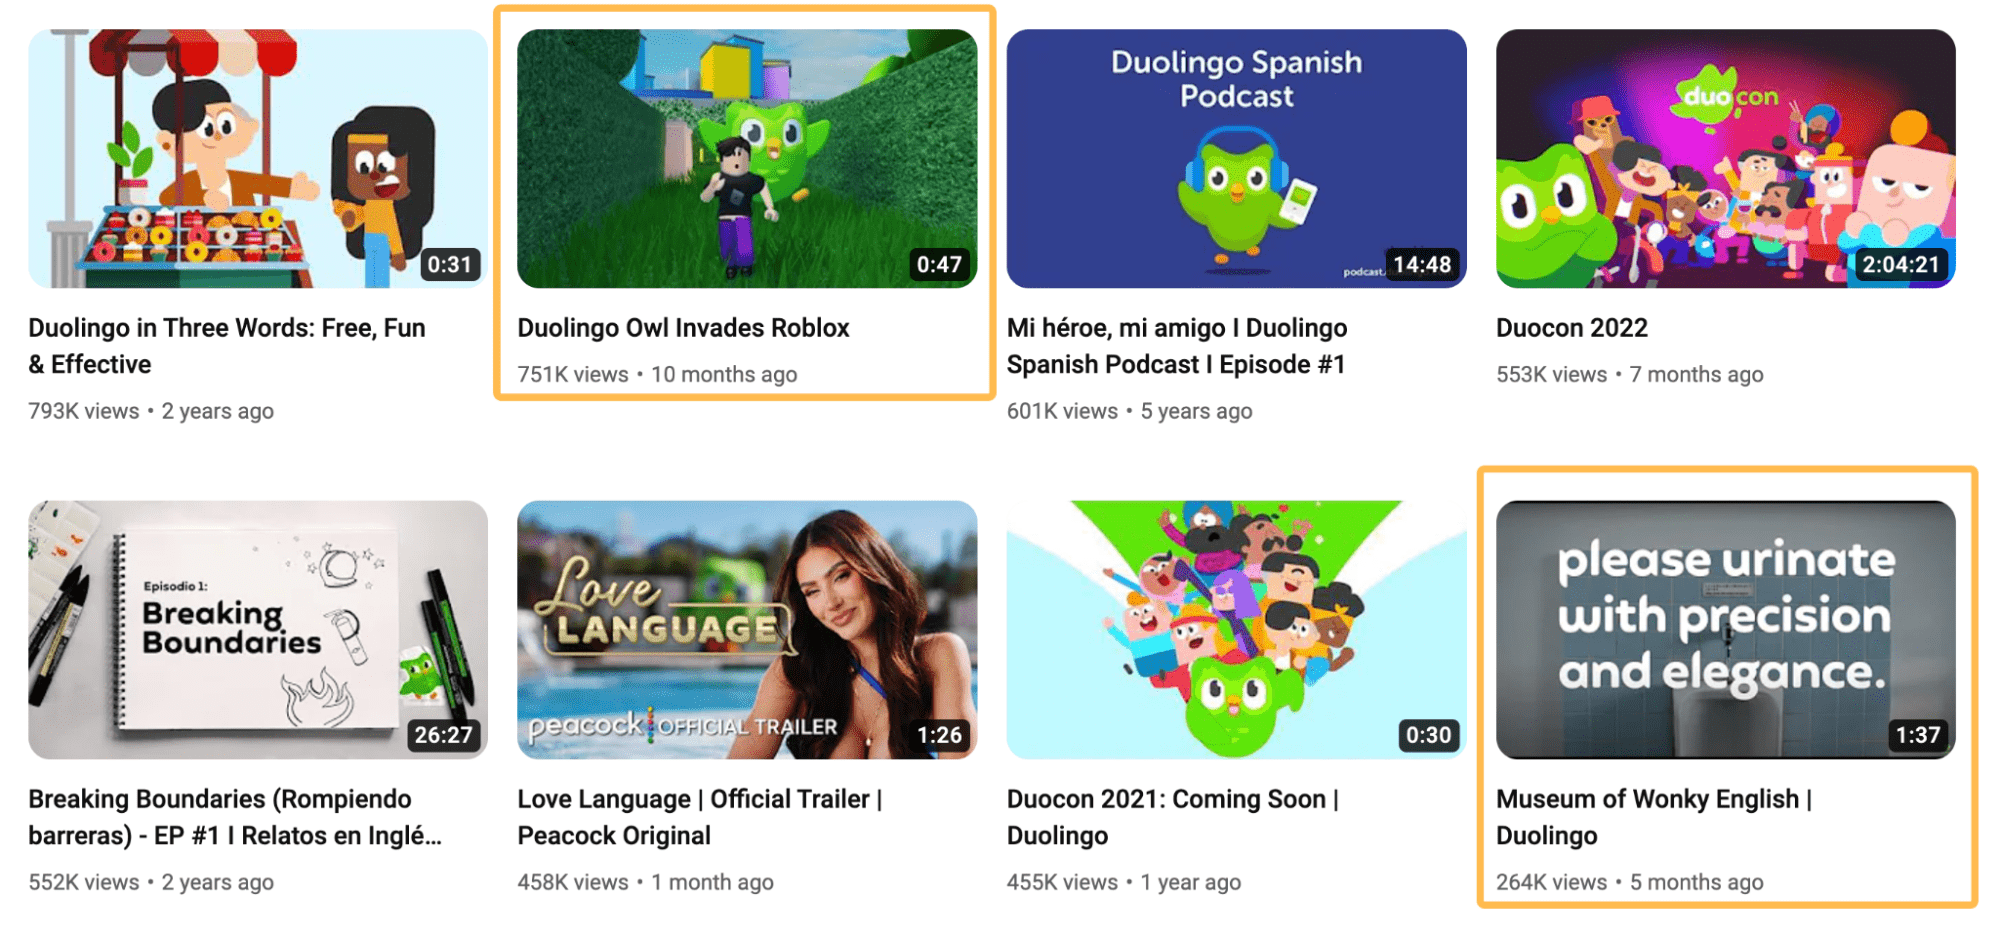 Duolingo's YouTube videos